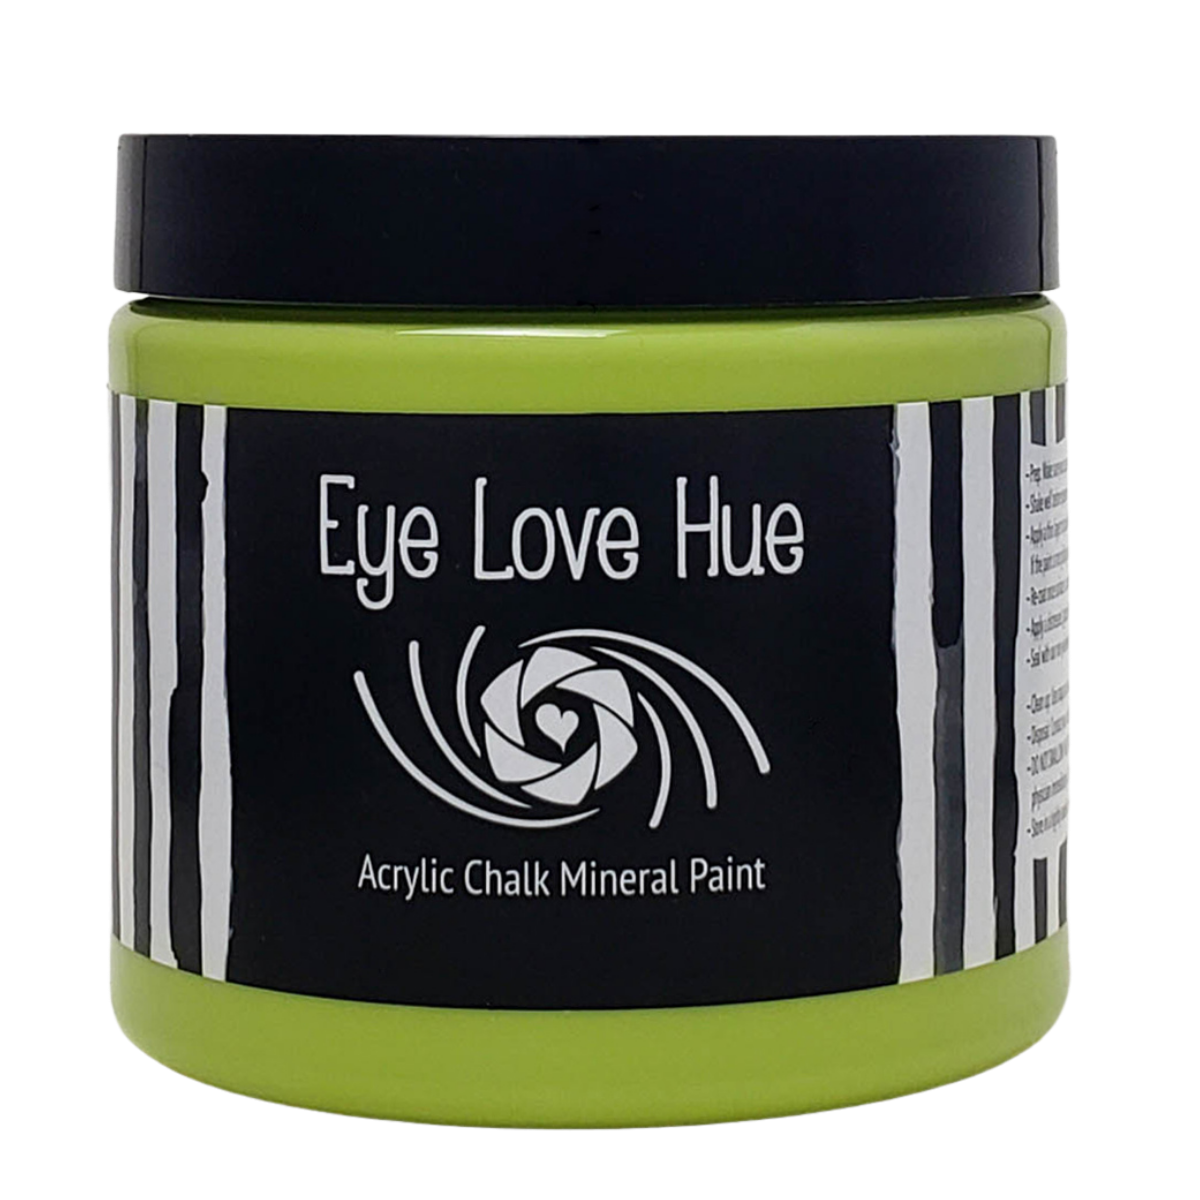 Eye Love Hue Paint - Acrylic Mineral Paint